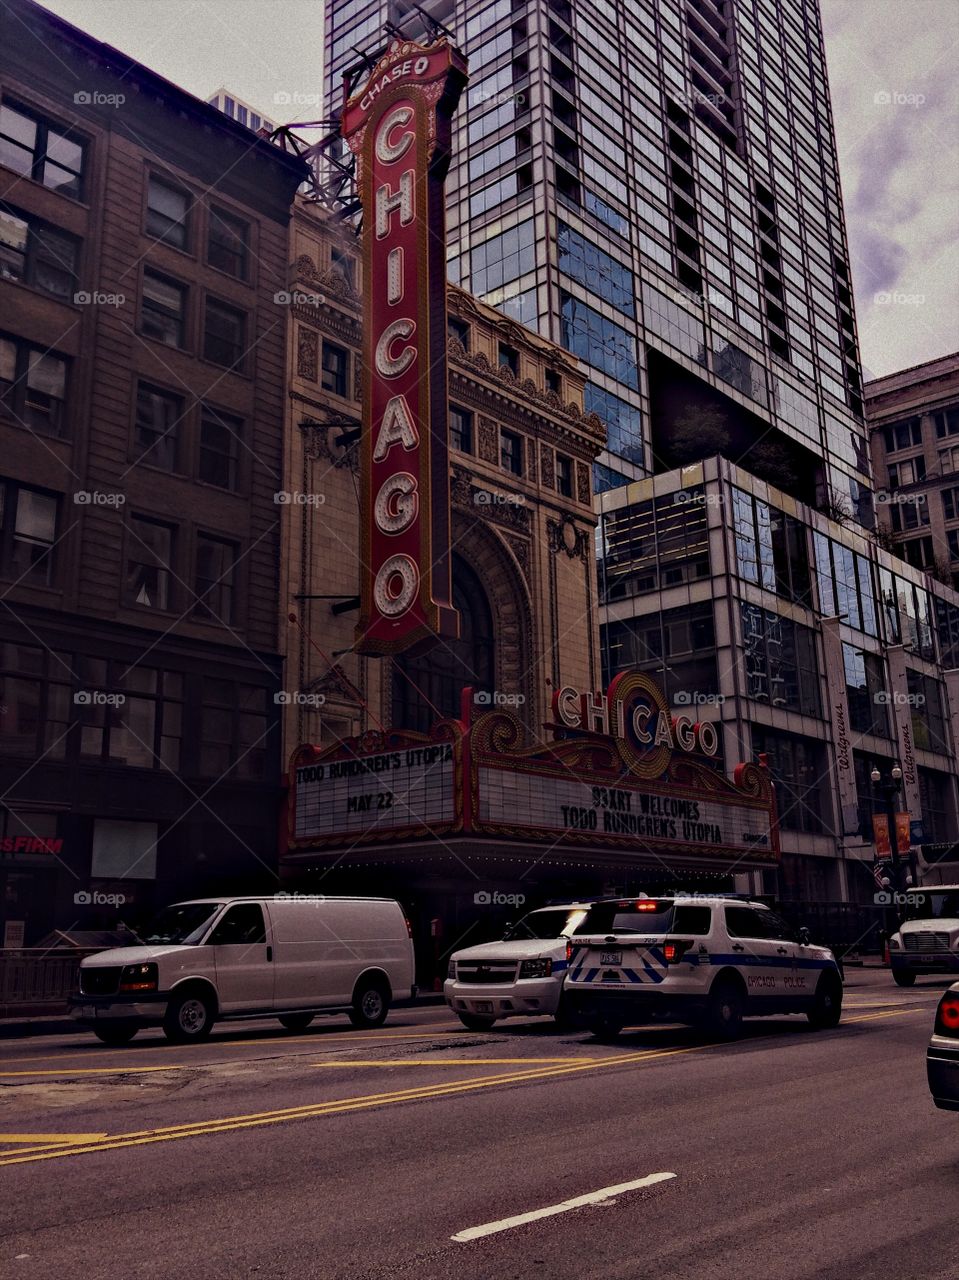 The Chicago Theatre 📸